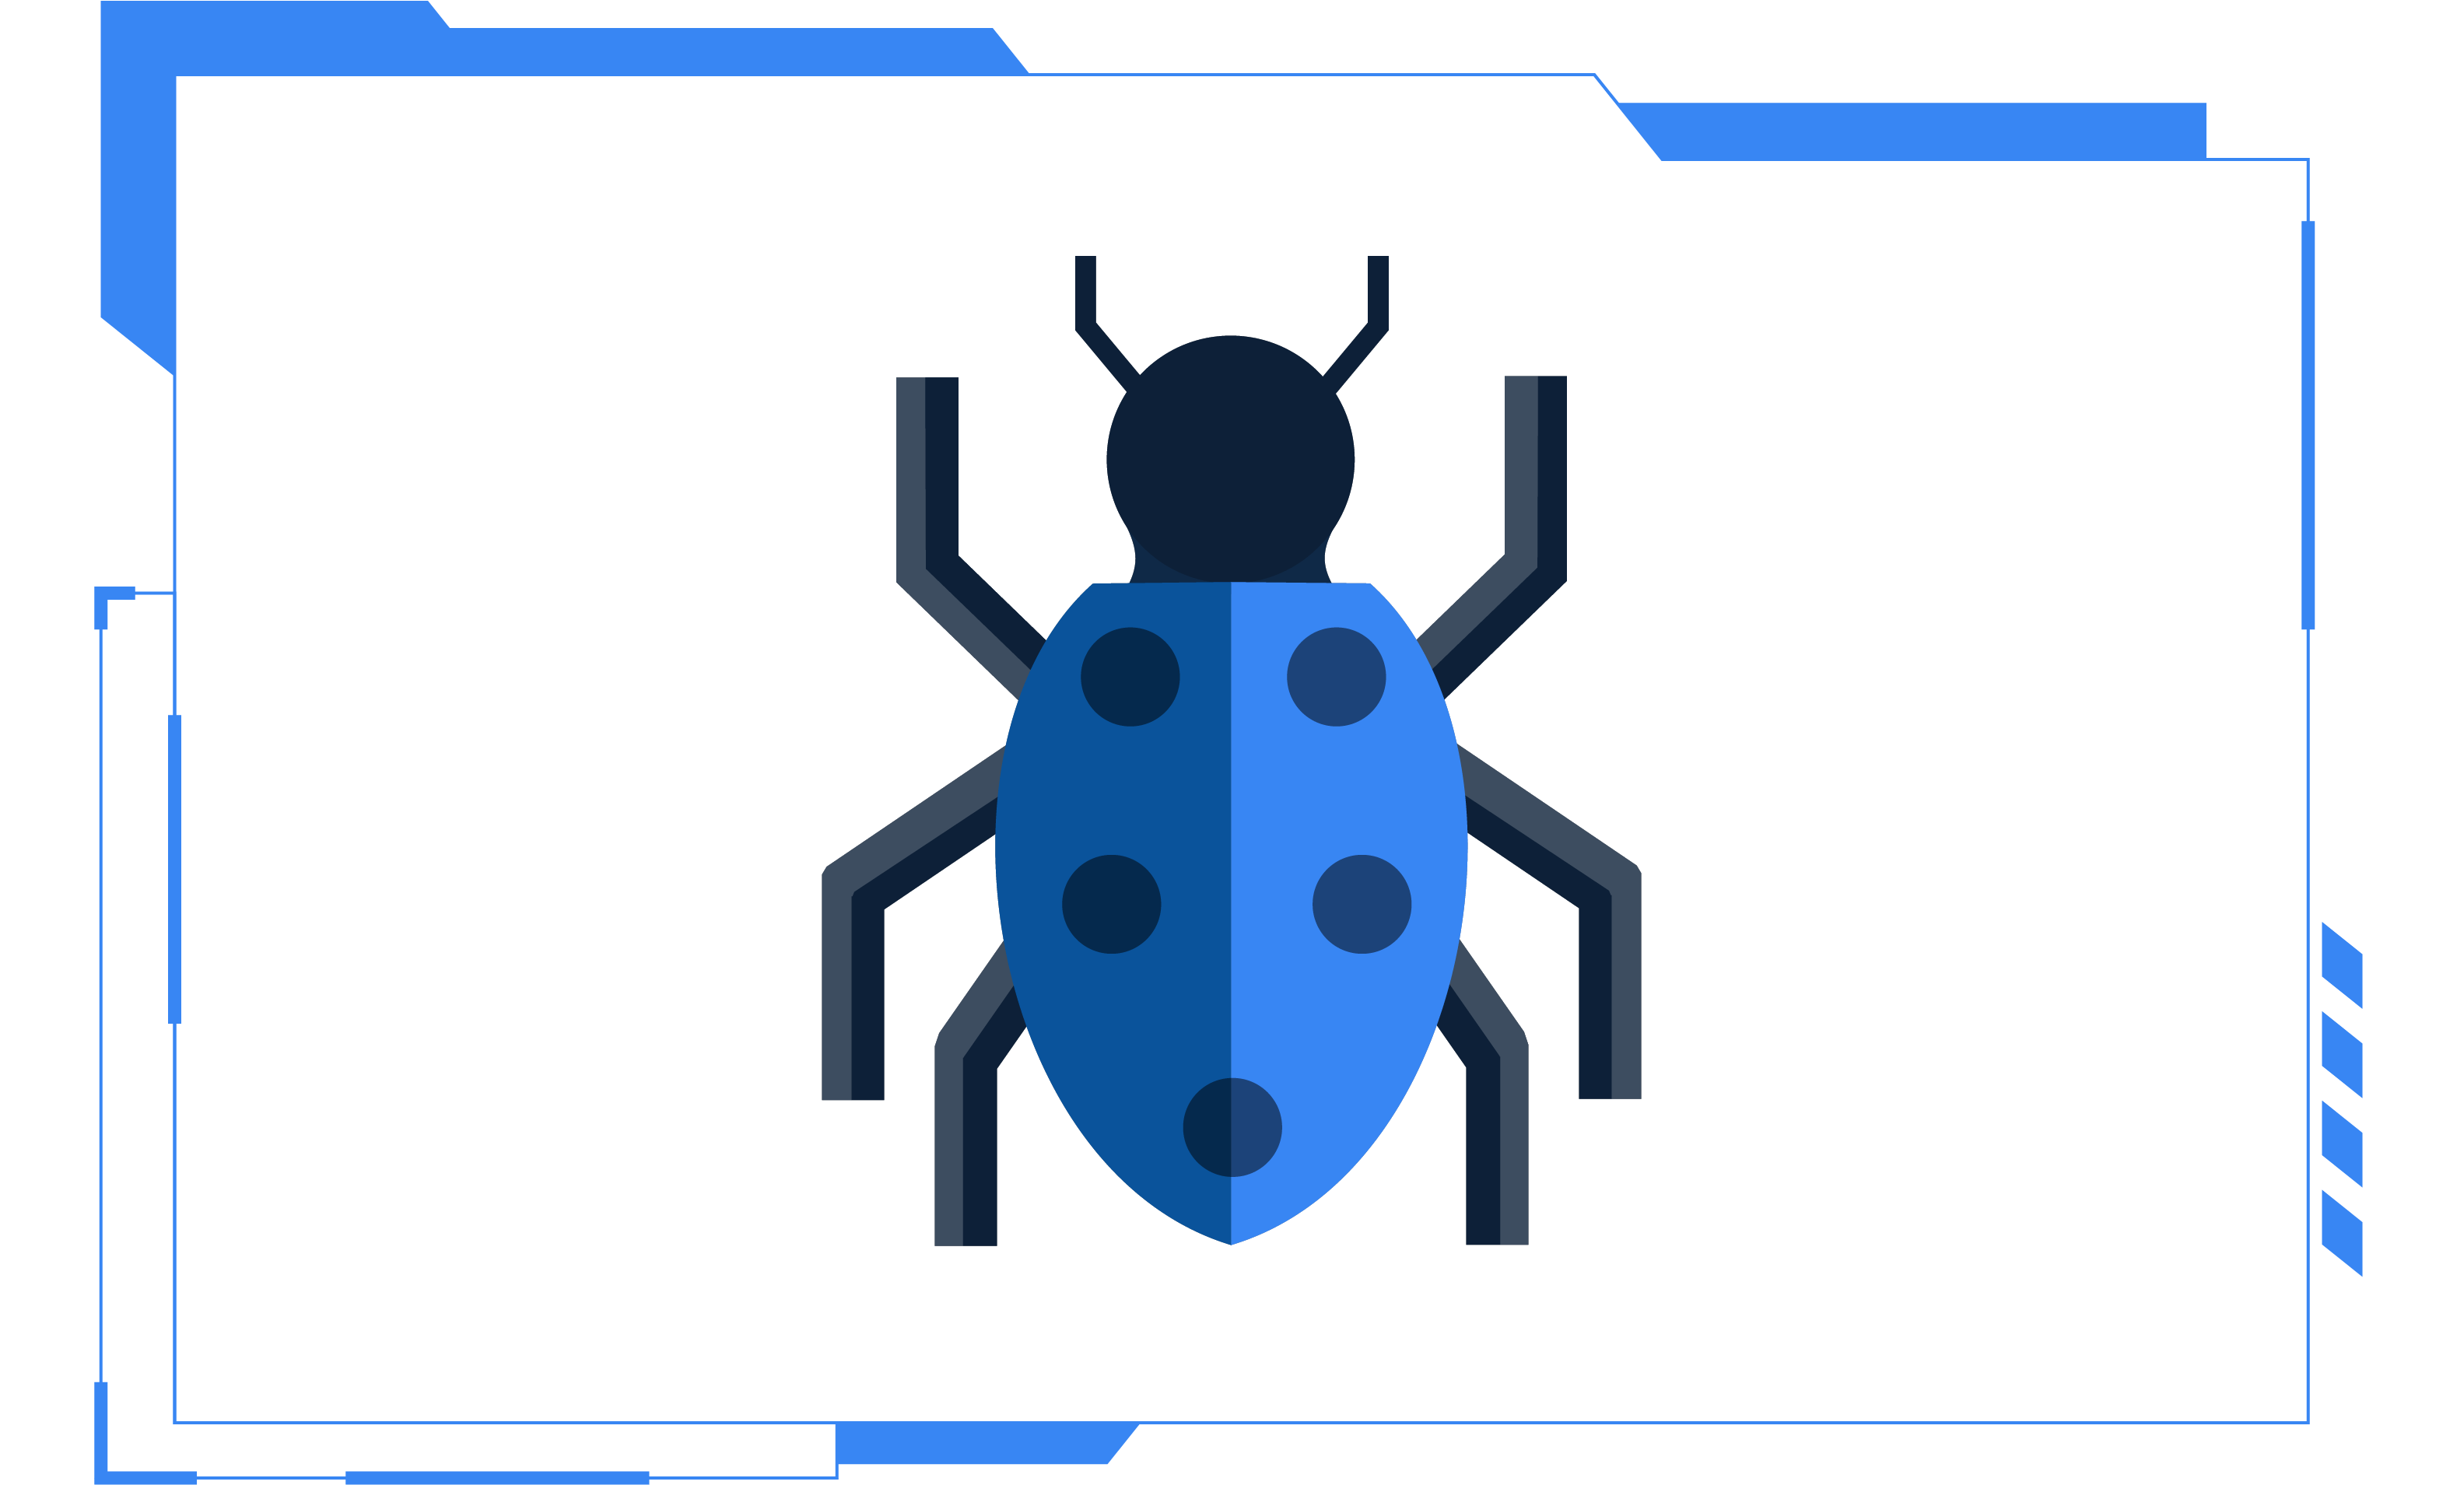 Bug Bounty